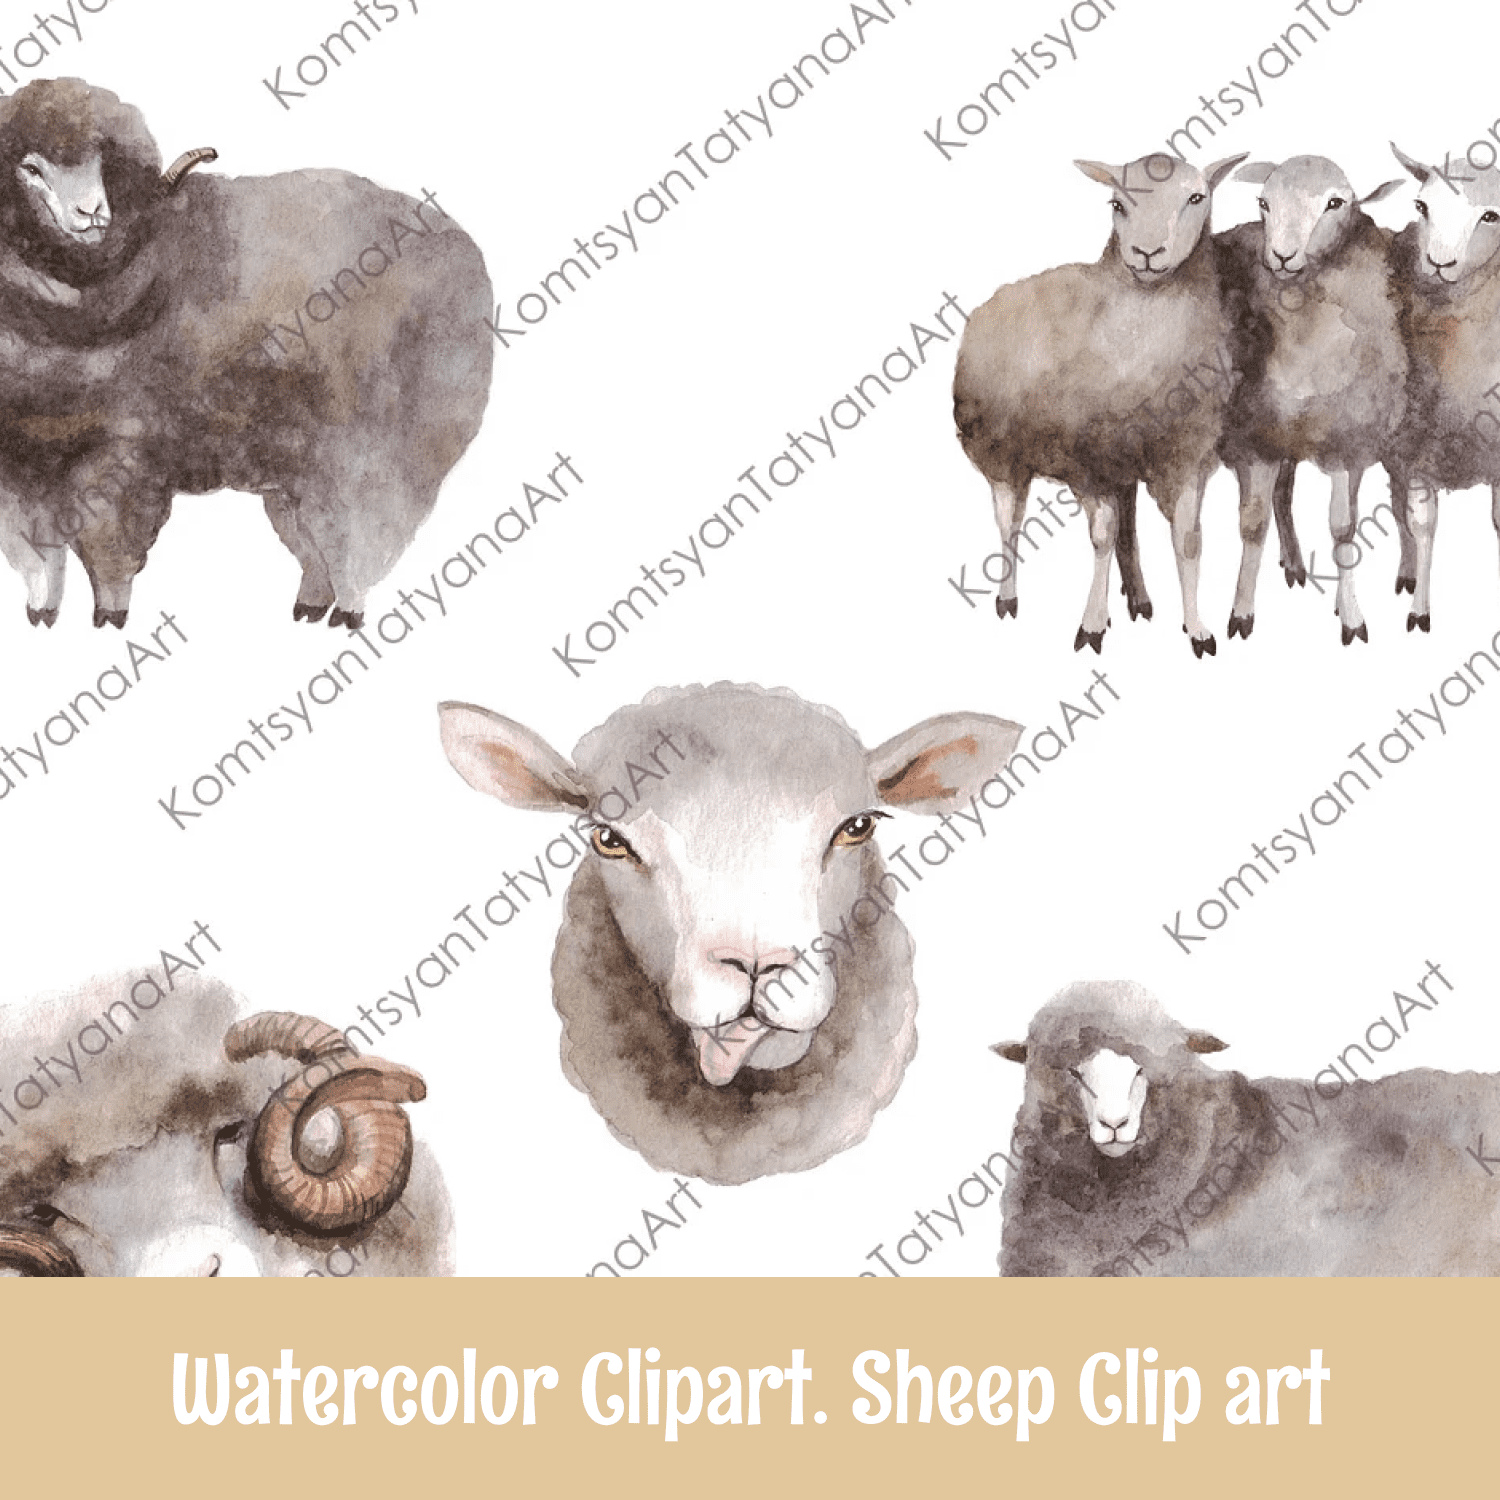 Watercolor Clipart. Sheep Clip art.